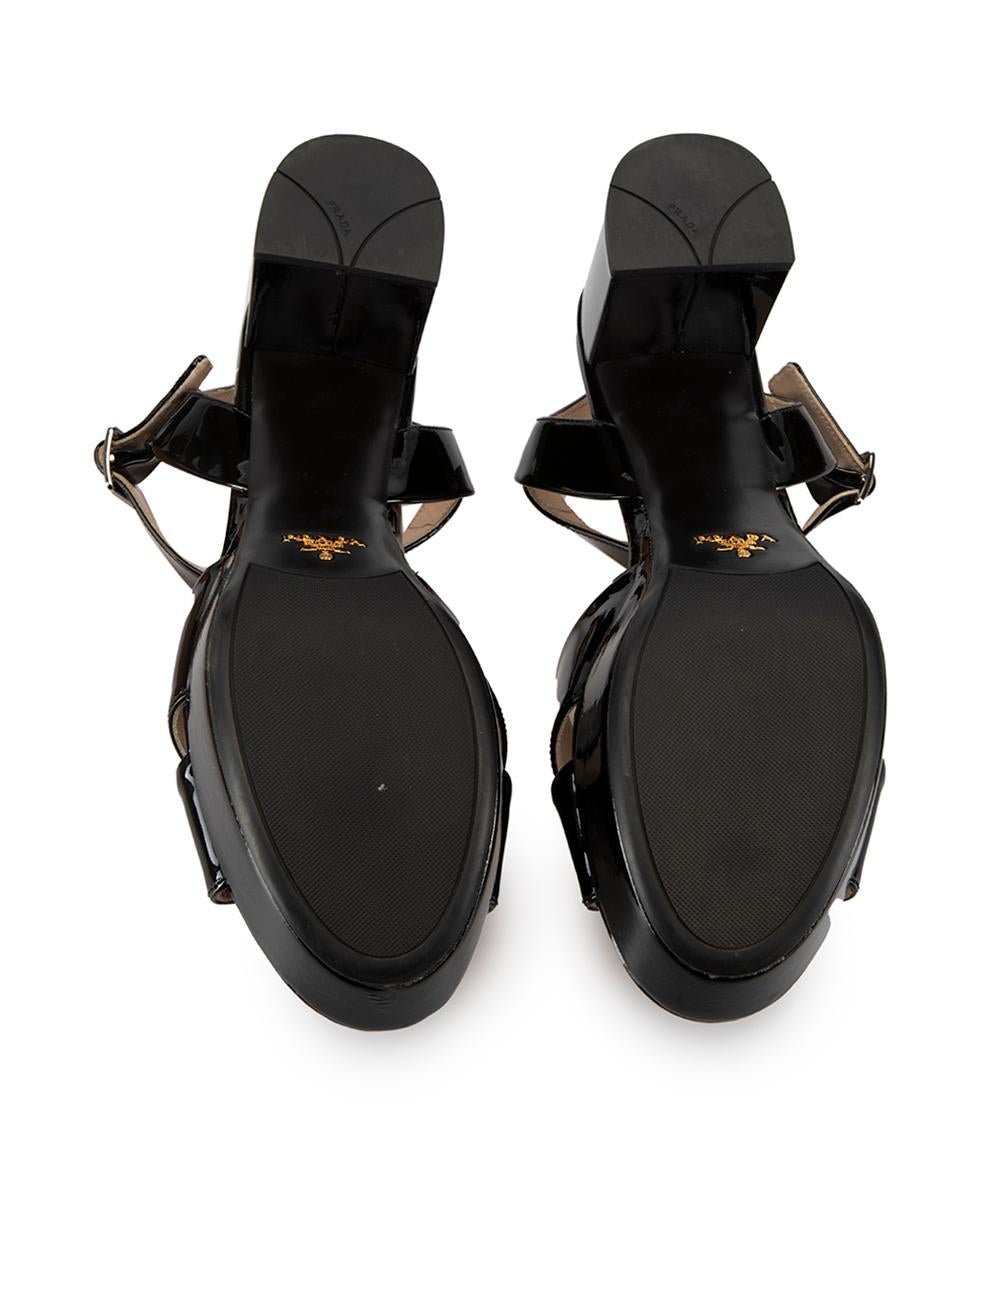 Women's Prada Black Patent Leather Cross Strap Platform Sandals Size IT 38.5